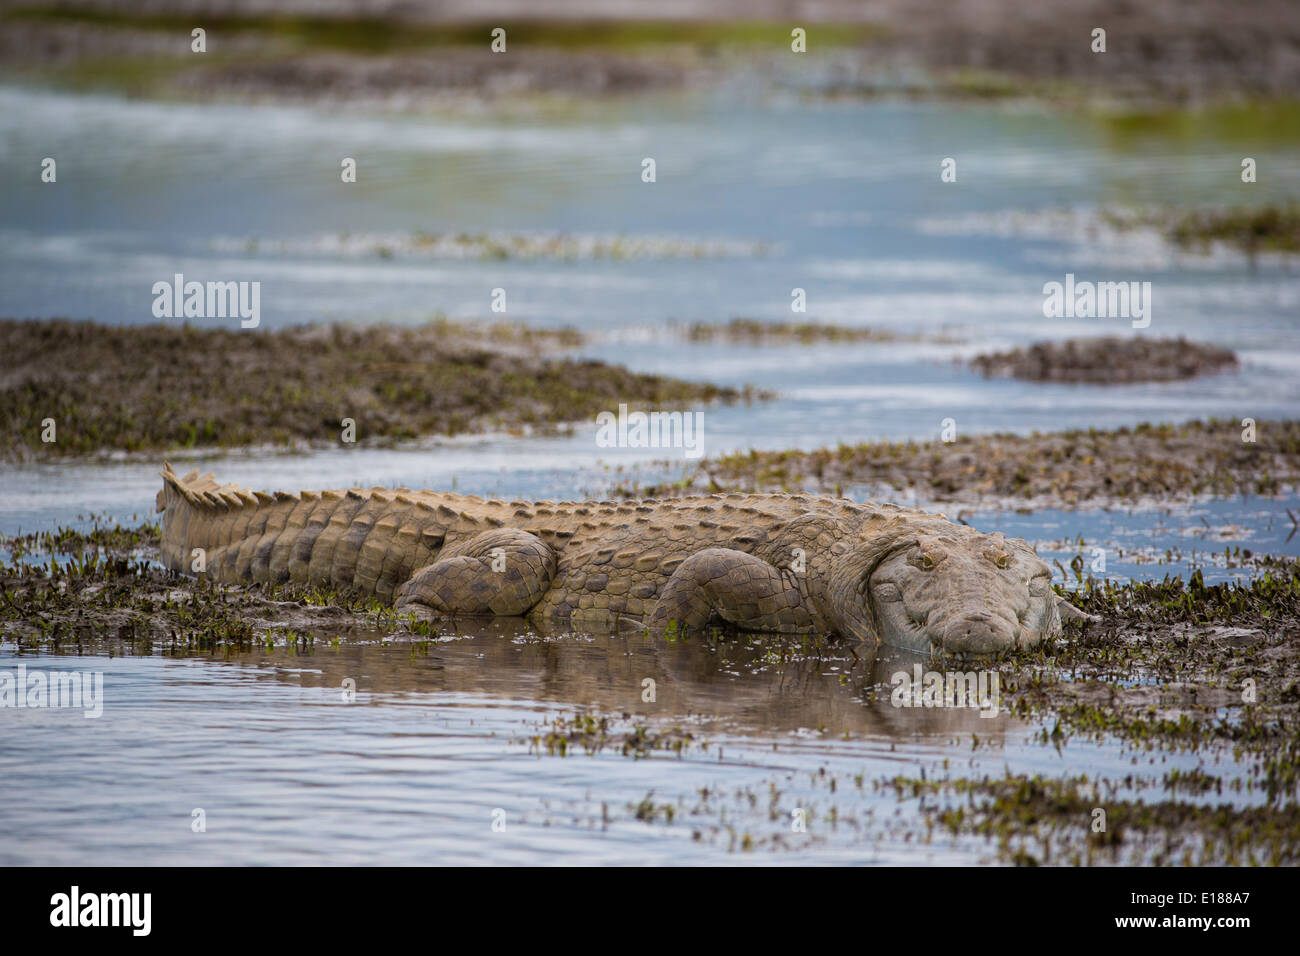 Nile Crocodile in shallow water Stock Photo